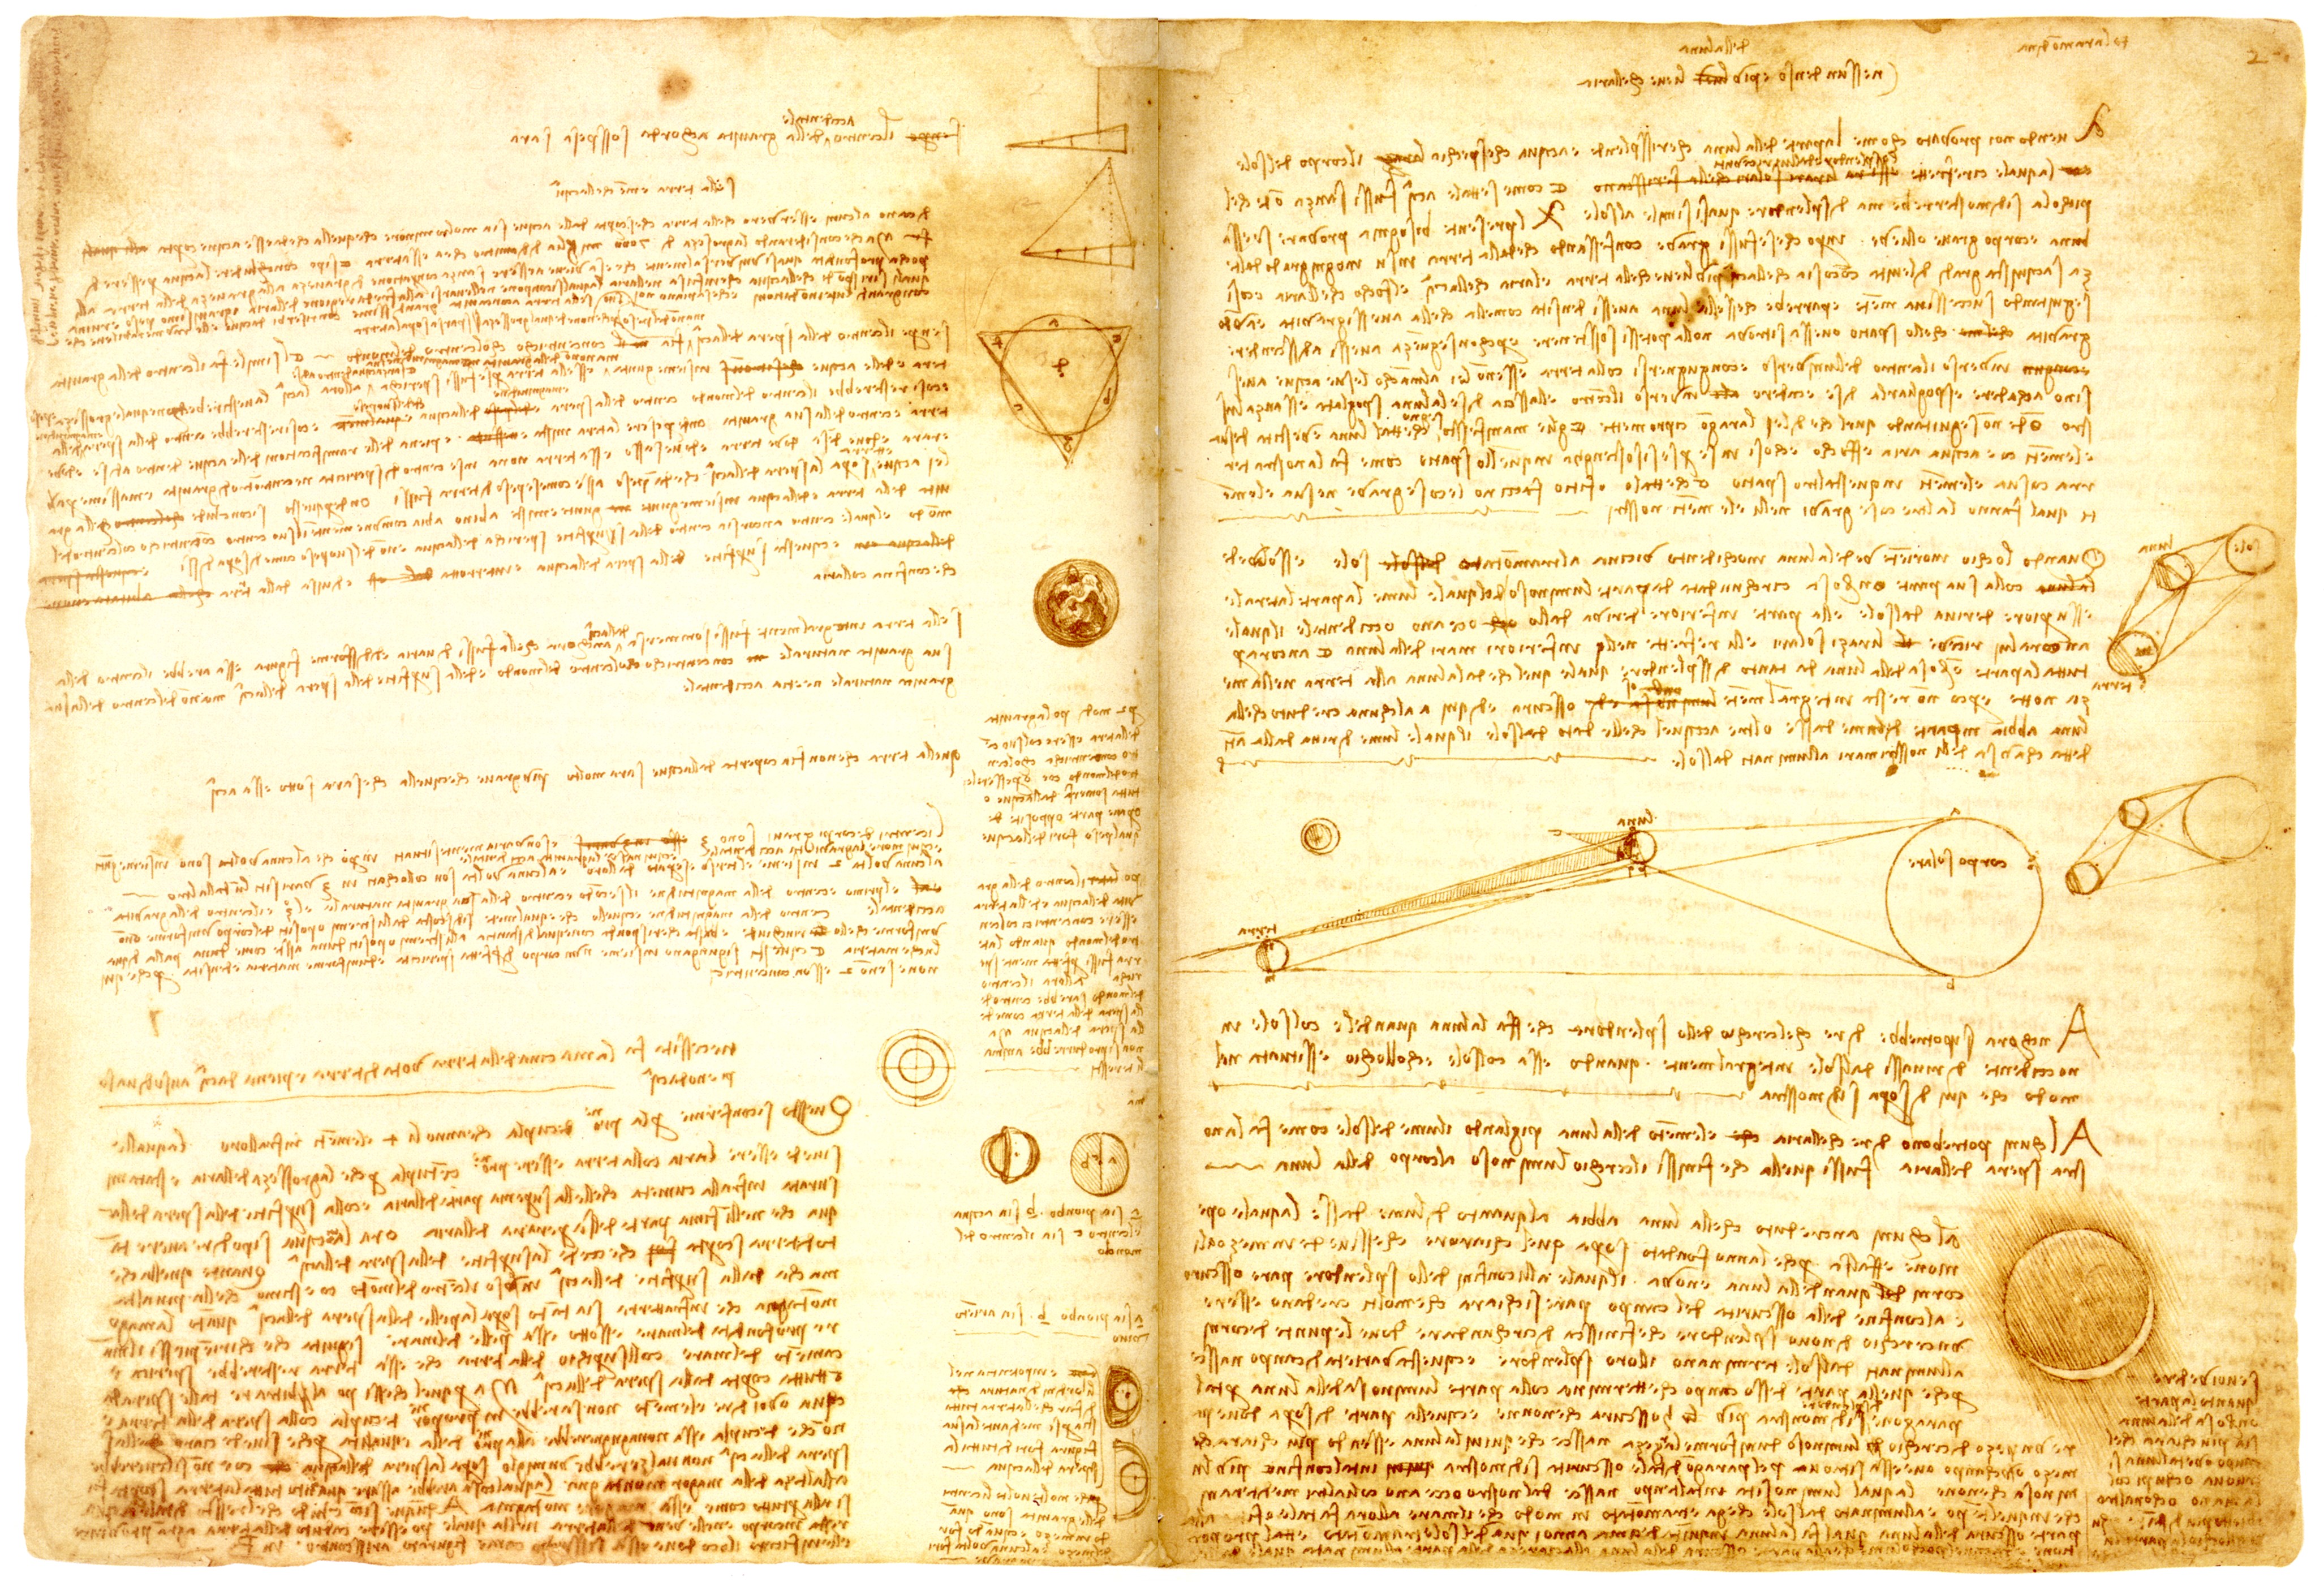 Book: The Codex Leicester of Leonardo da Vinci ($30.8 million)